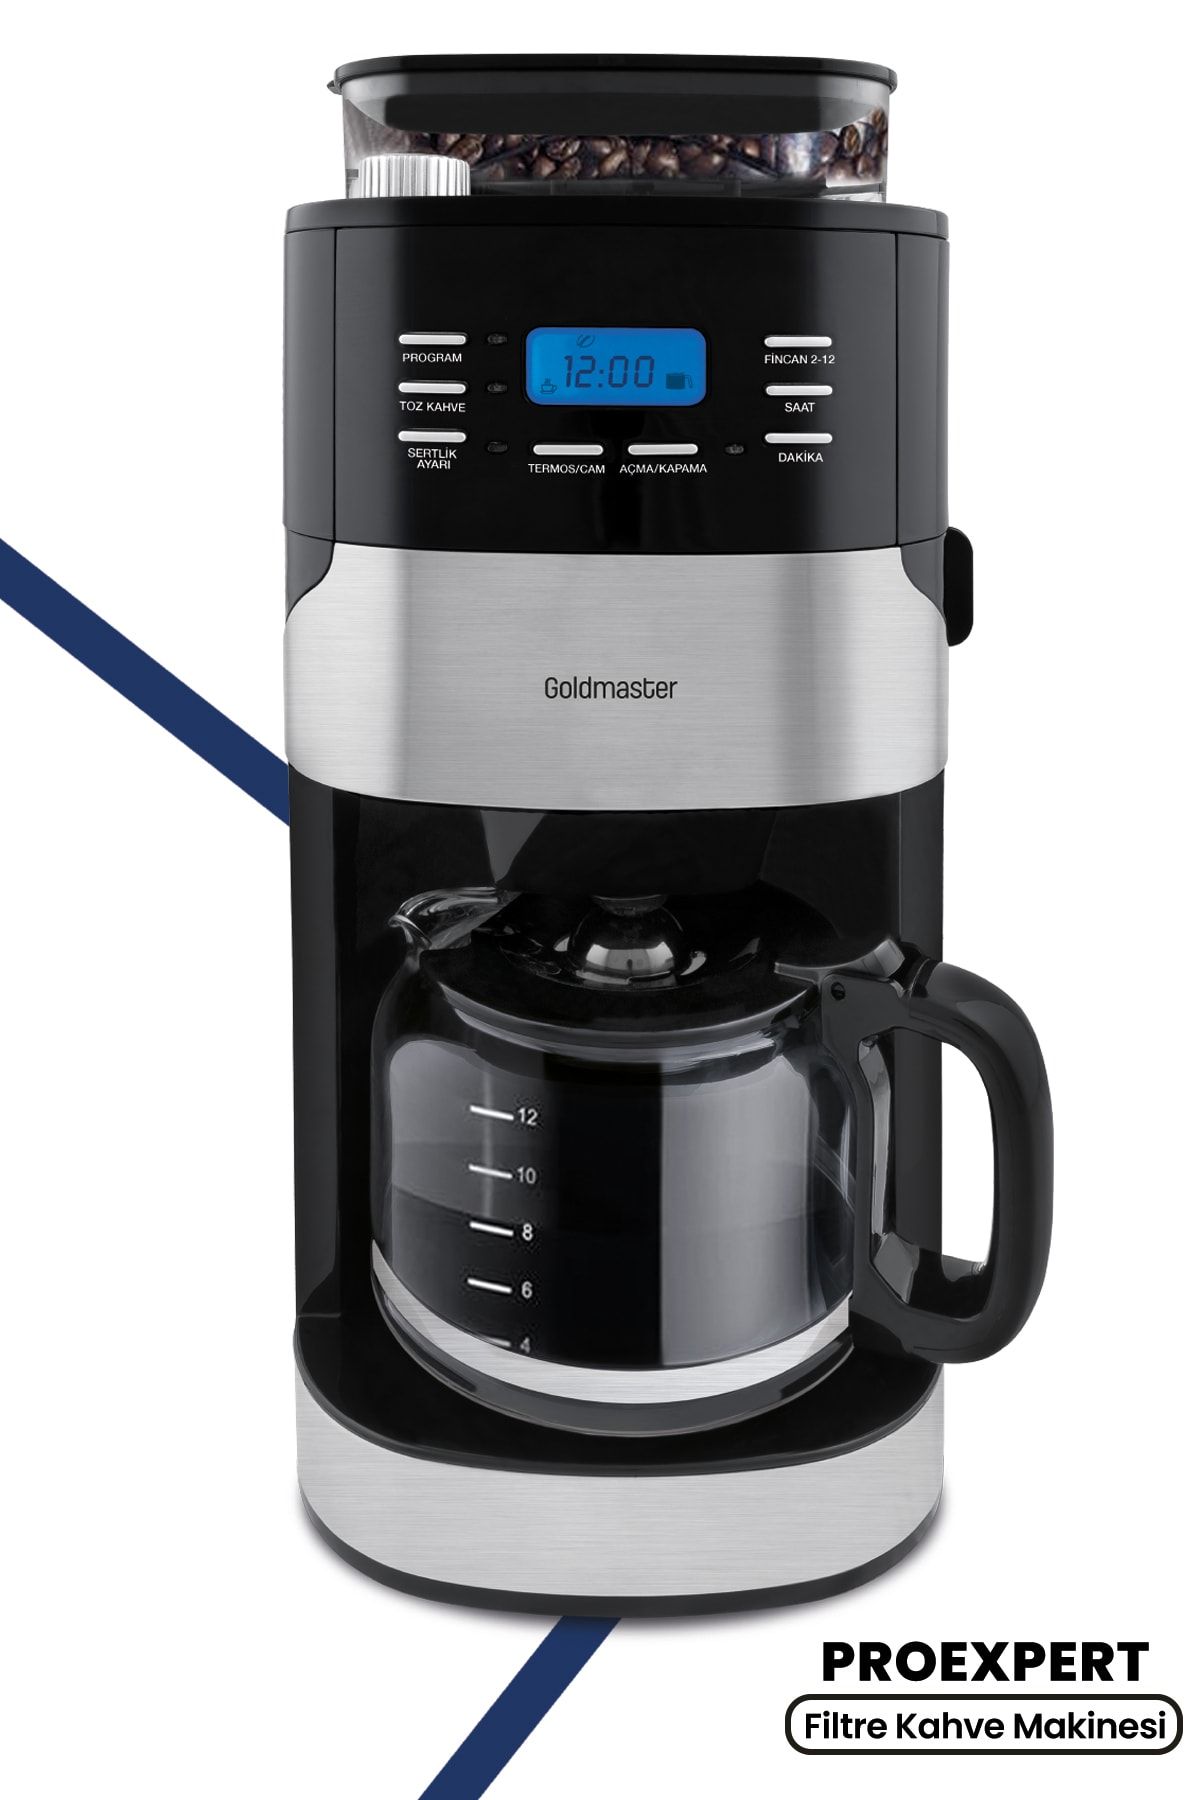 GoldMaster Proexpert Öğütücülü Otomatik Filtre Kahve Makinesi